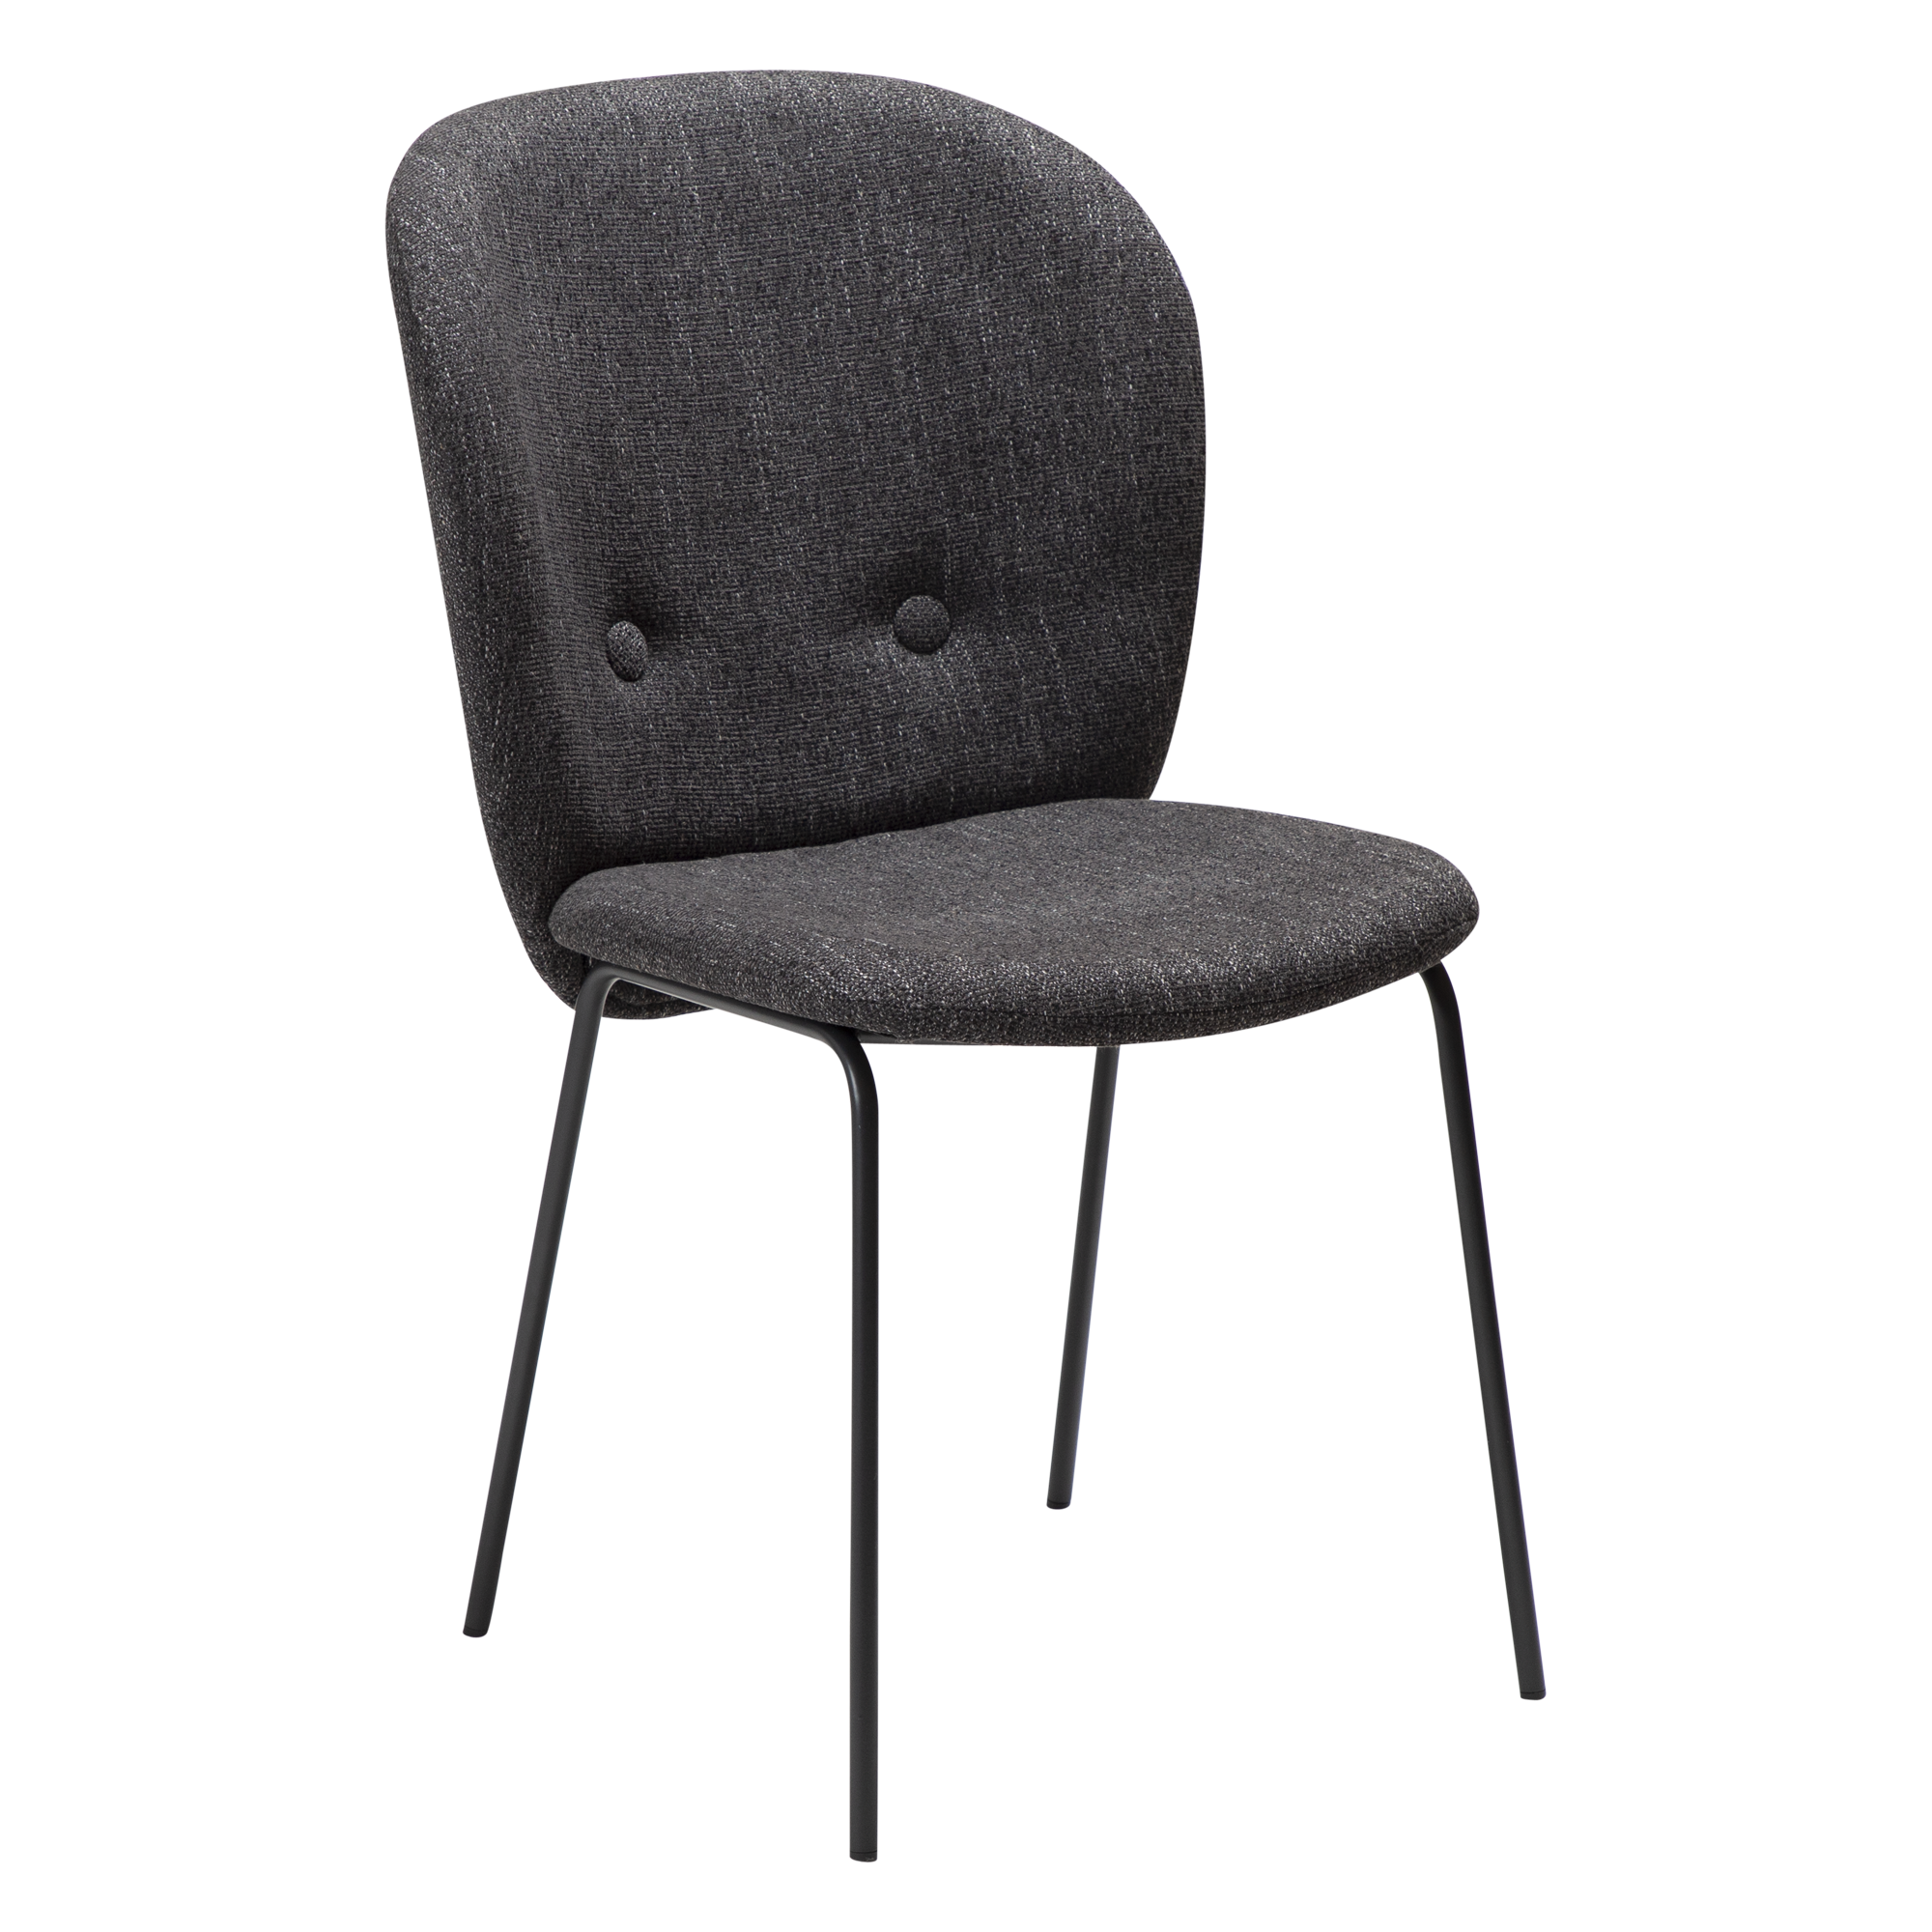 Brace Chair Raven Black Boucle Fabric With Black Metal Legs 100112100 01 Main